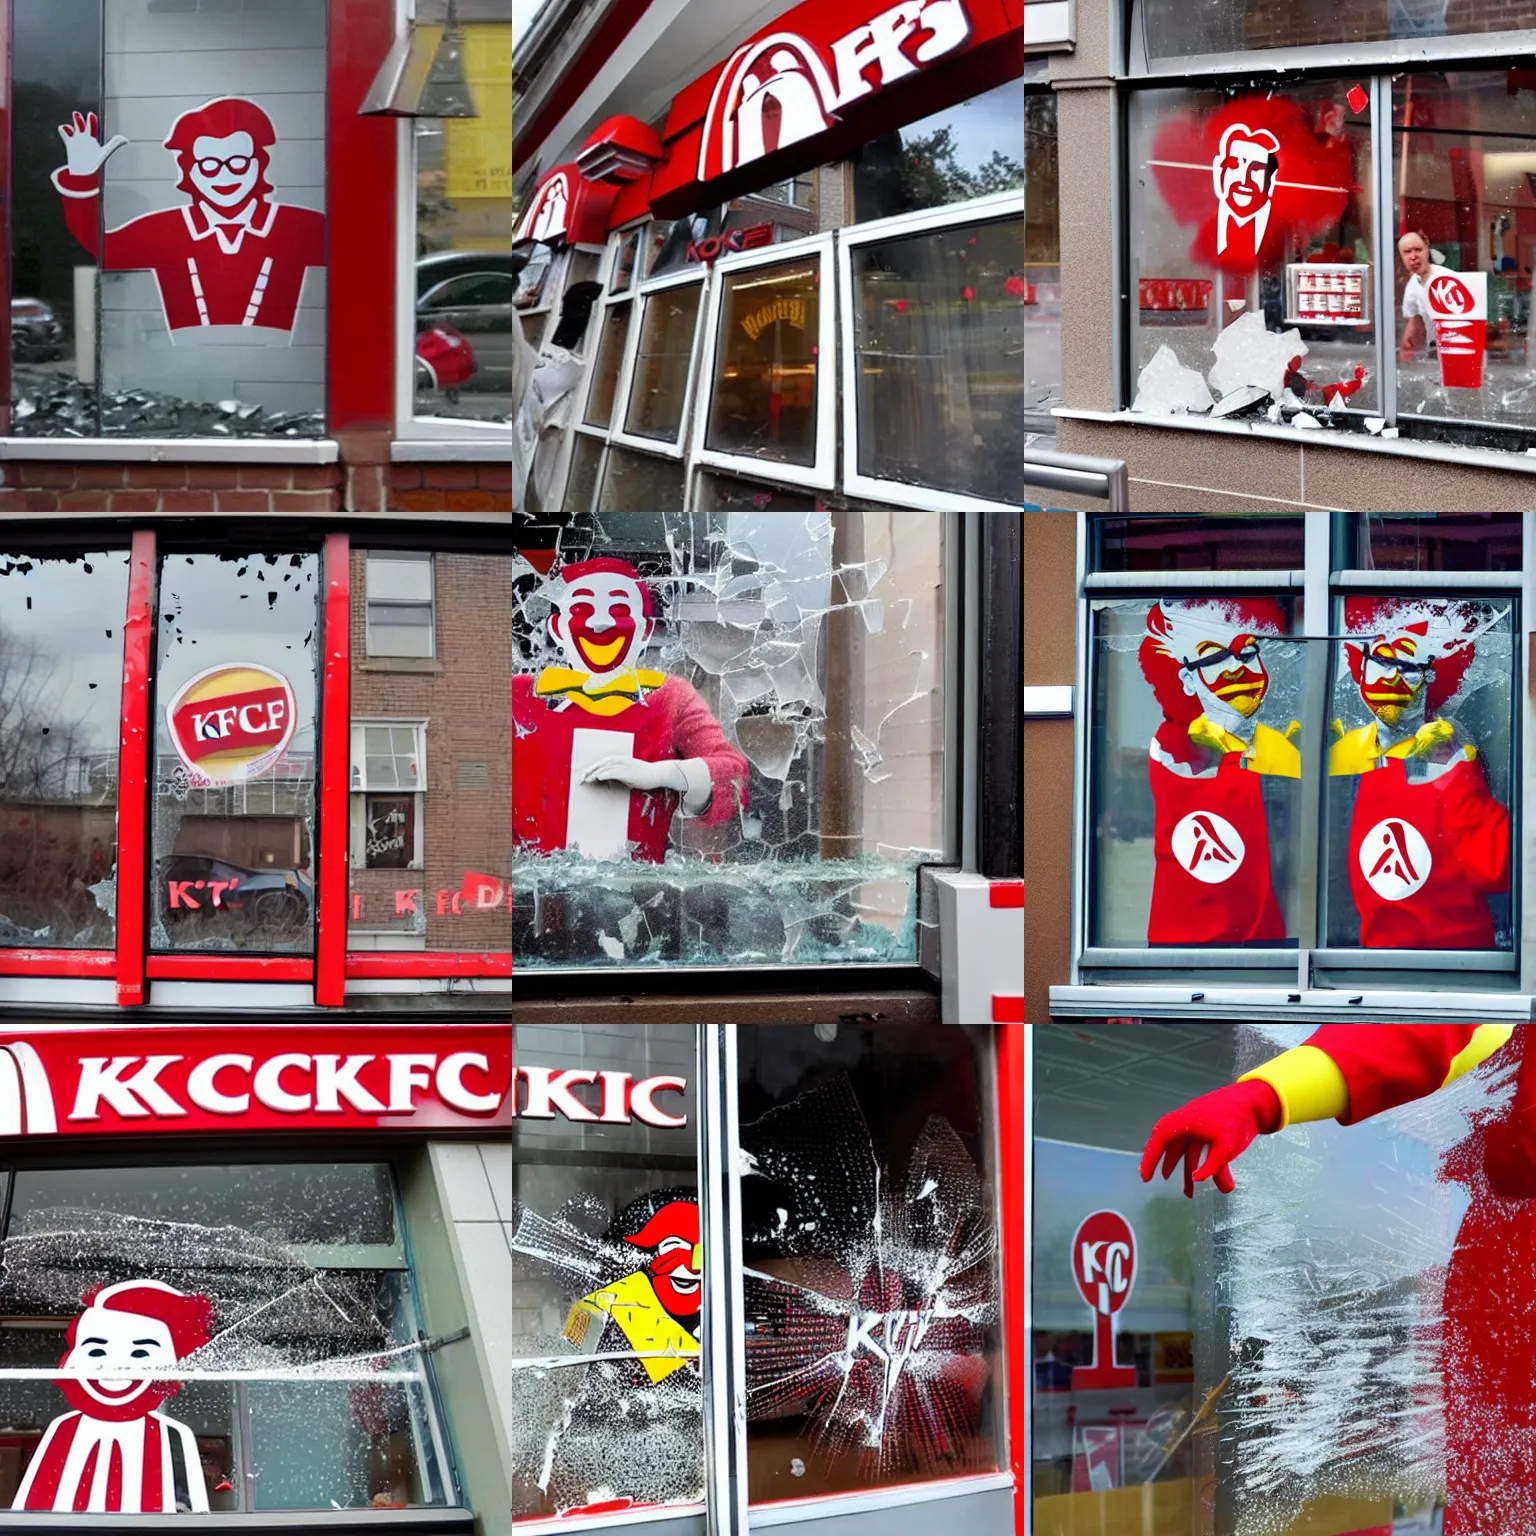 Prompt: Ronald McDonald smashing the window of KFC fast food shop, broken glass, shattering, broken window, KFC sign